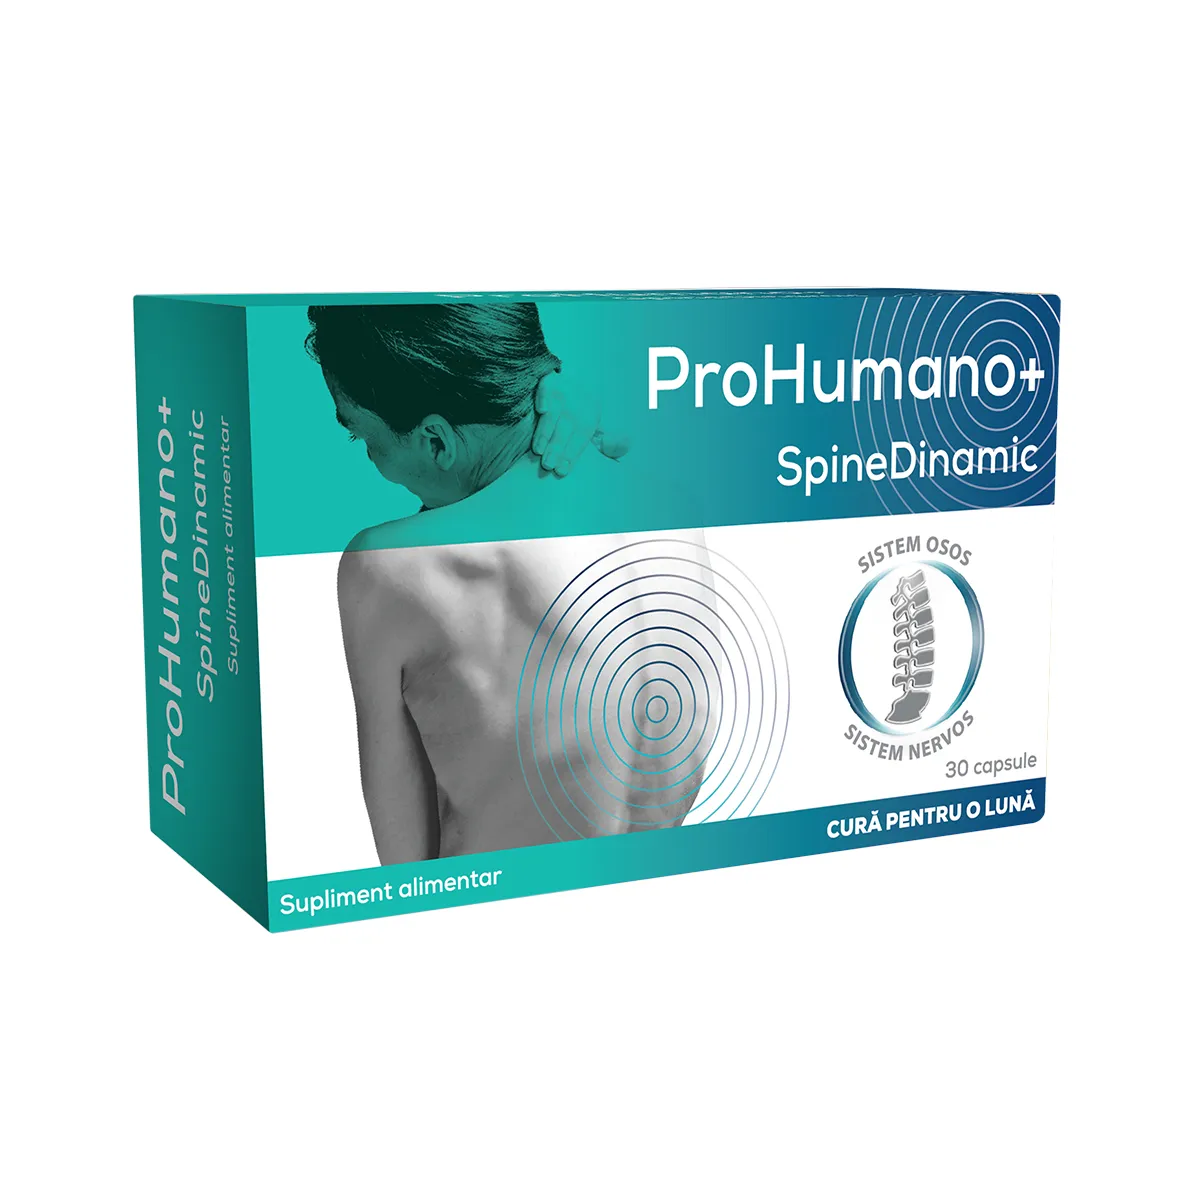 Pro Humano + Spine Dinamic, 30 capsule, Pharmalinea